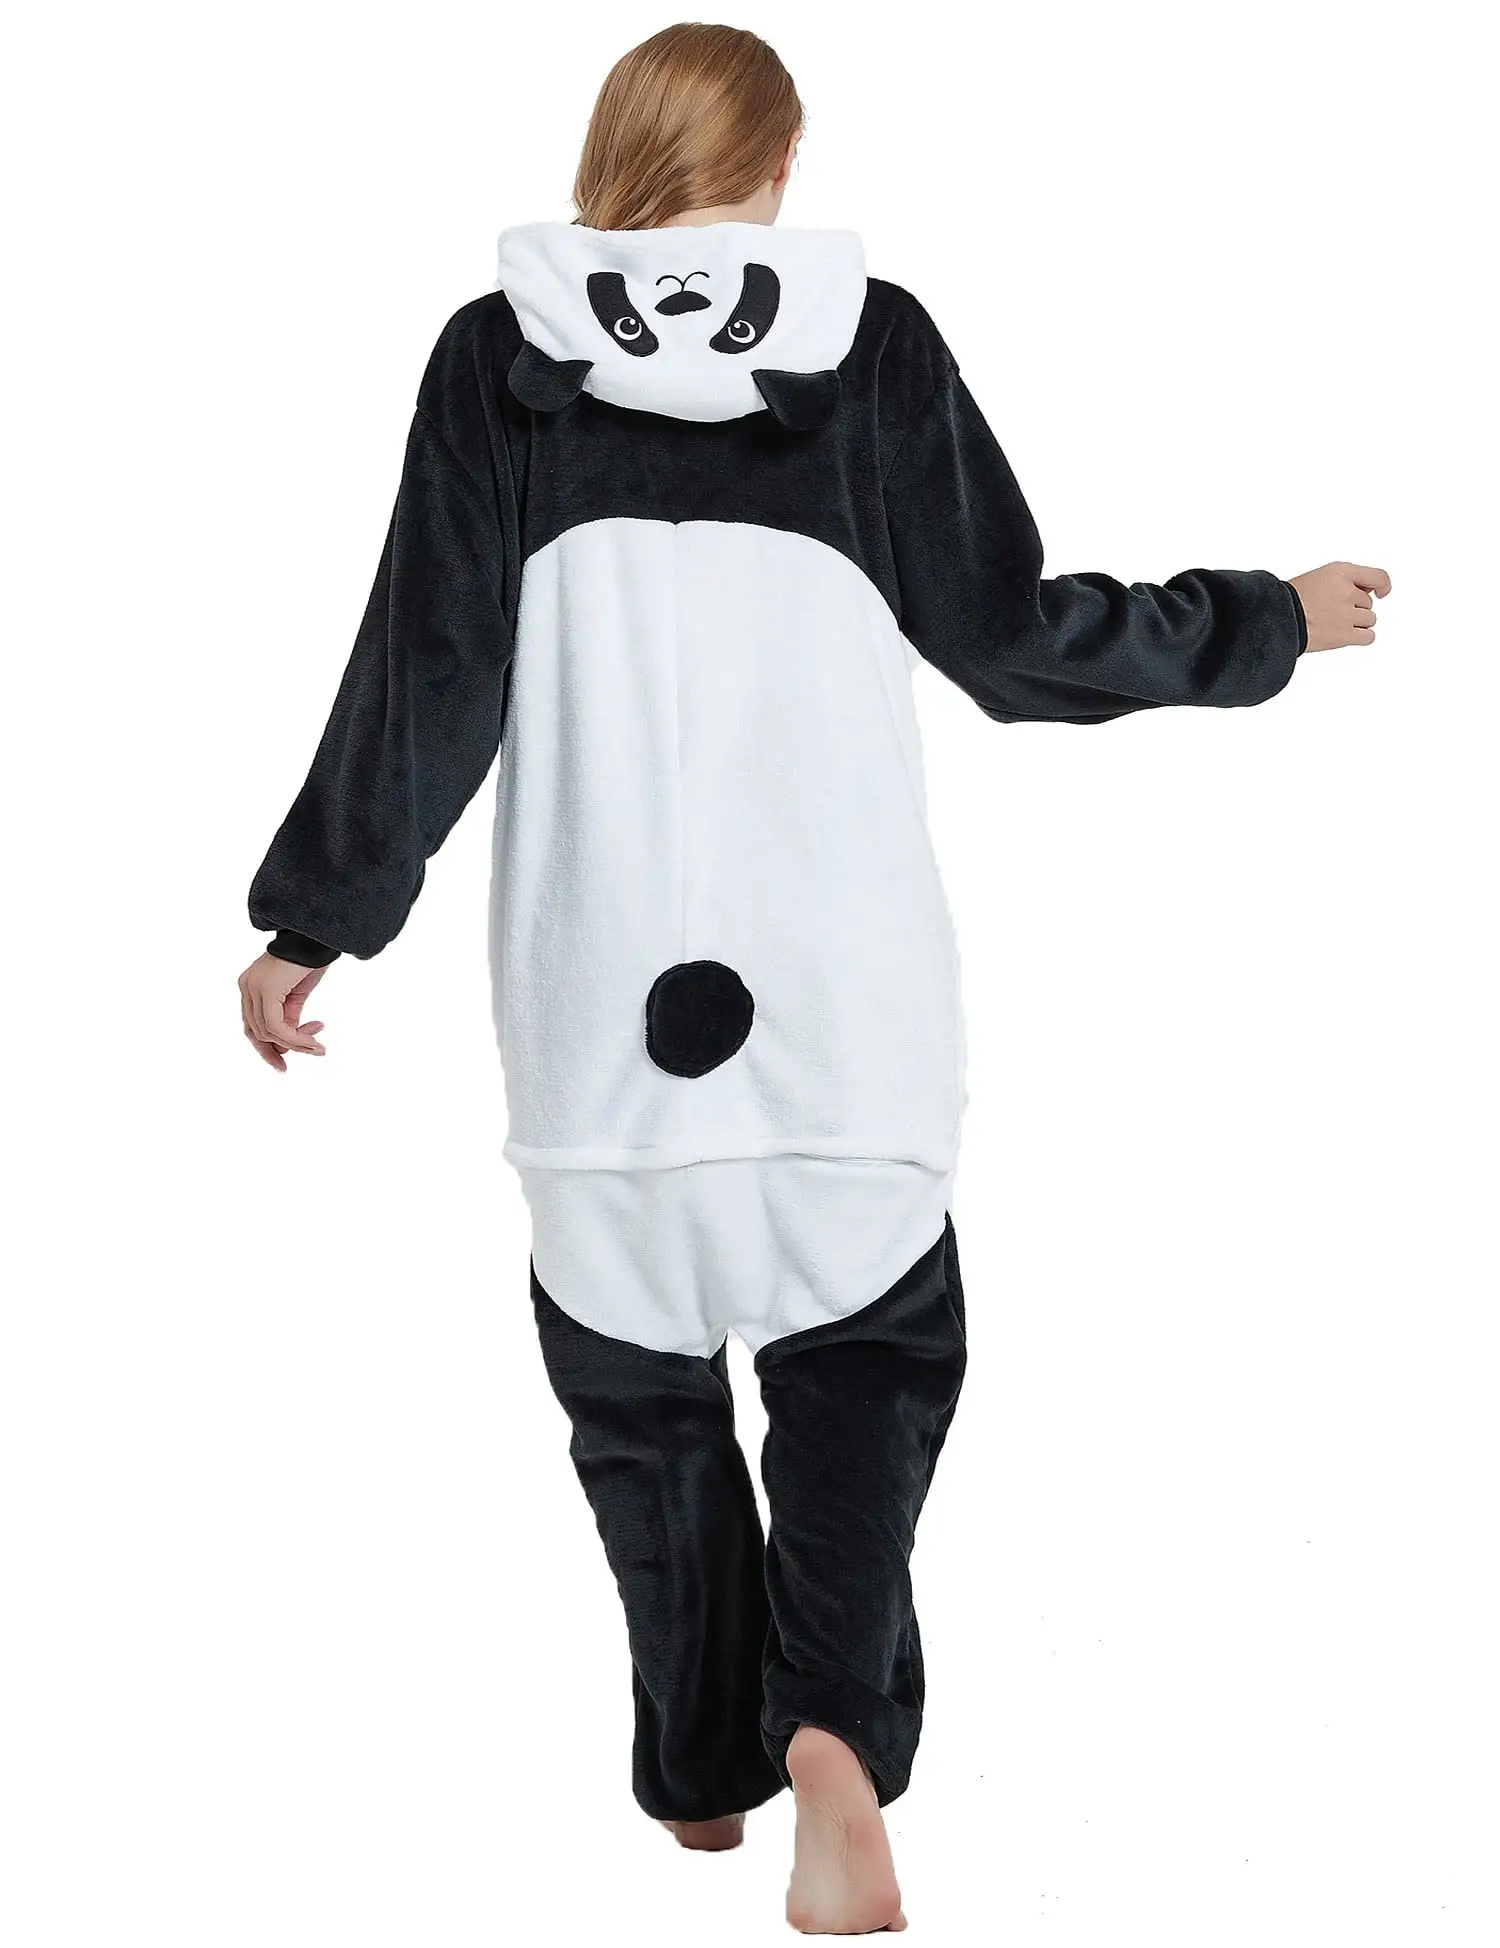 Panda Costumes Animal Onesie Costumes for Girls Halloween Pyjama Party